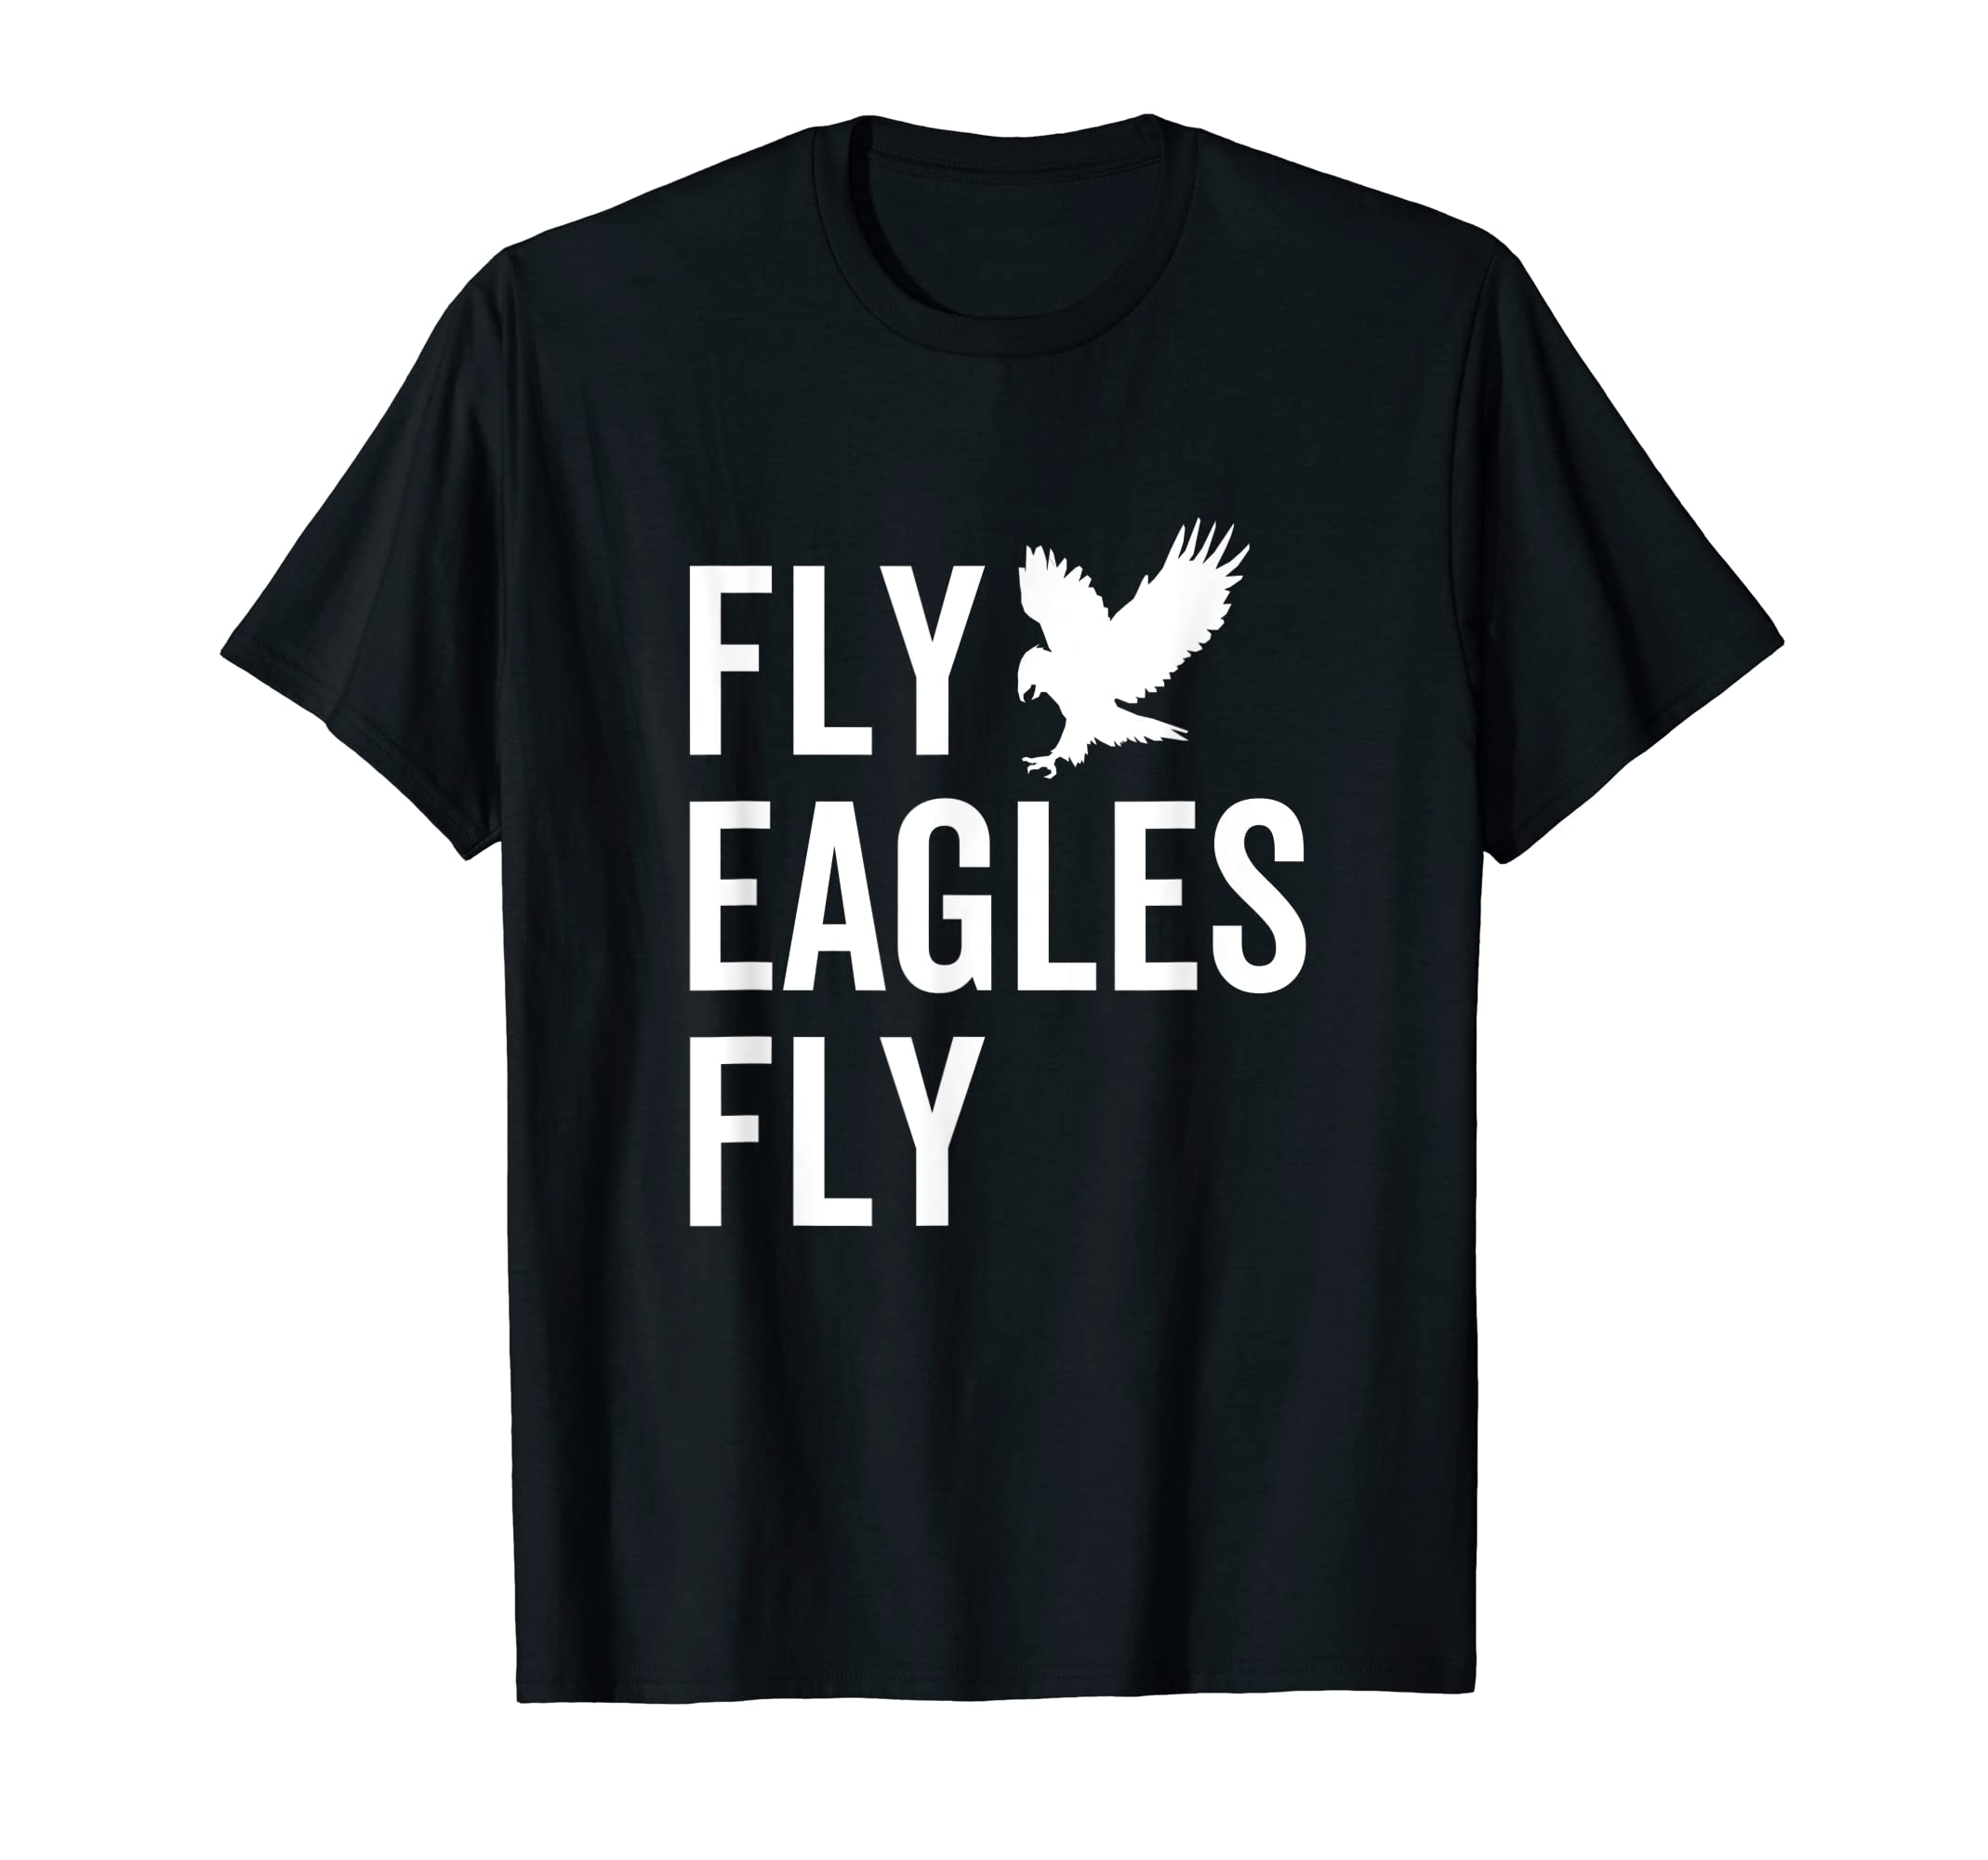 Fly Eagles Fly Vintage Flying Bird Inspirational Hawk Fan T-Shirt